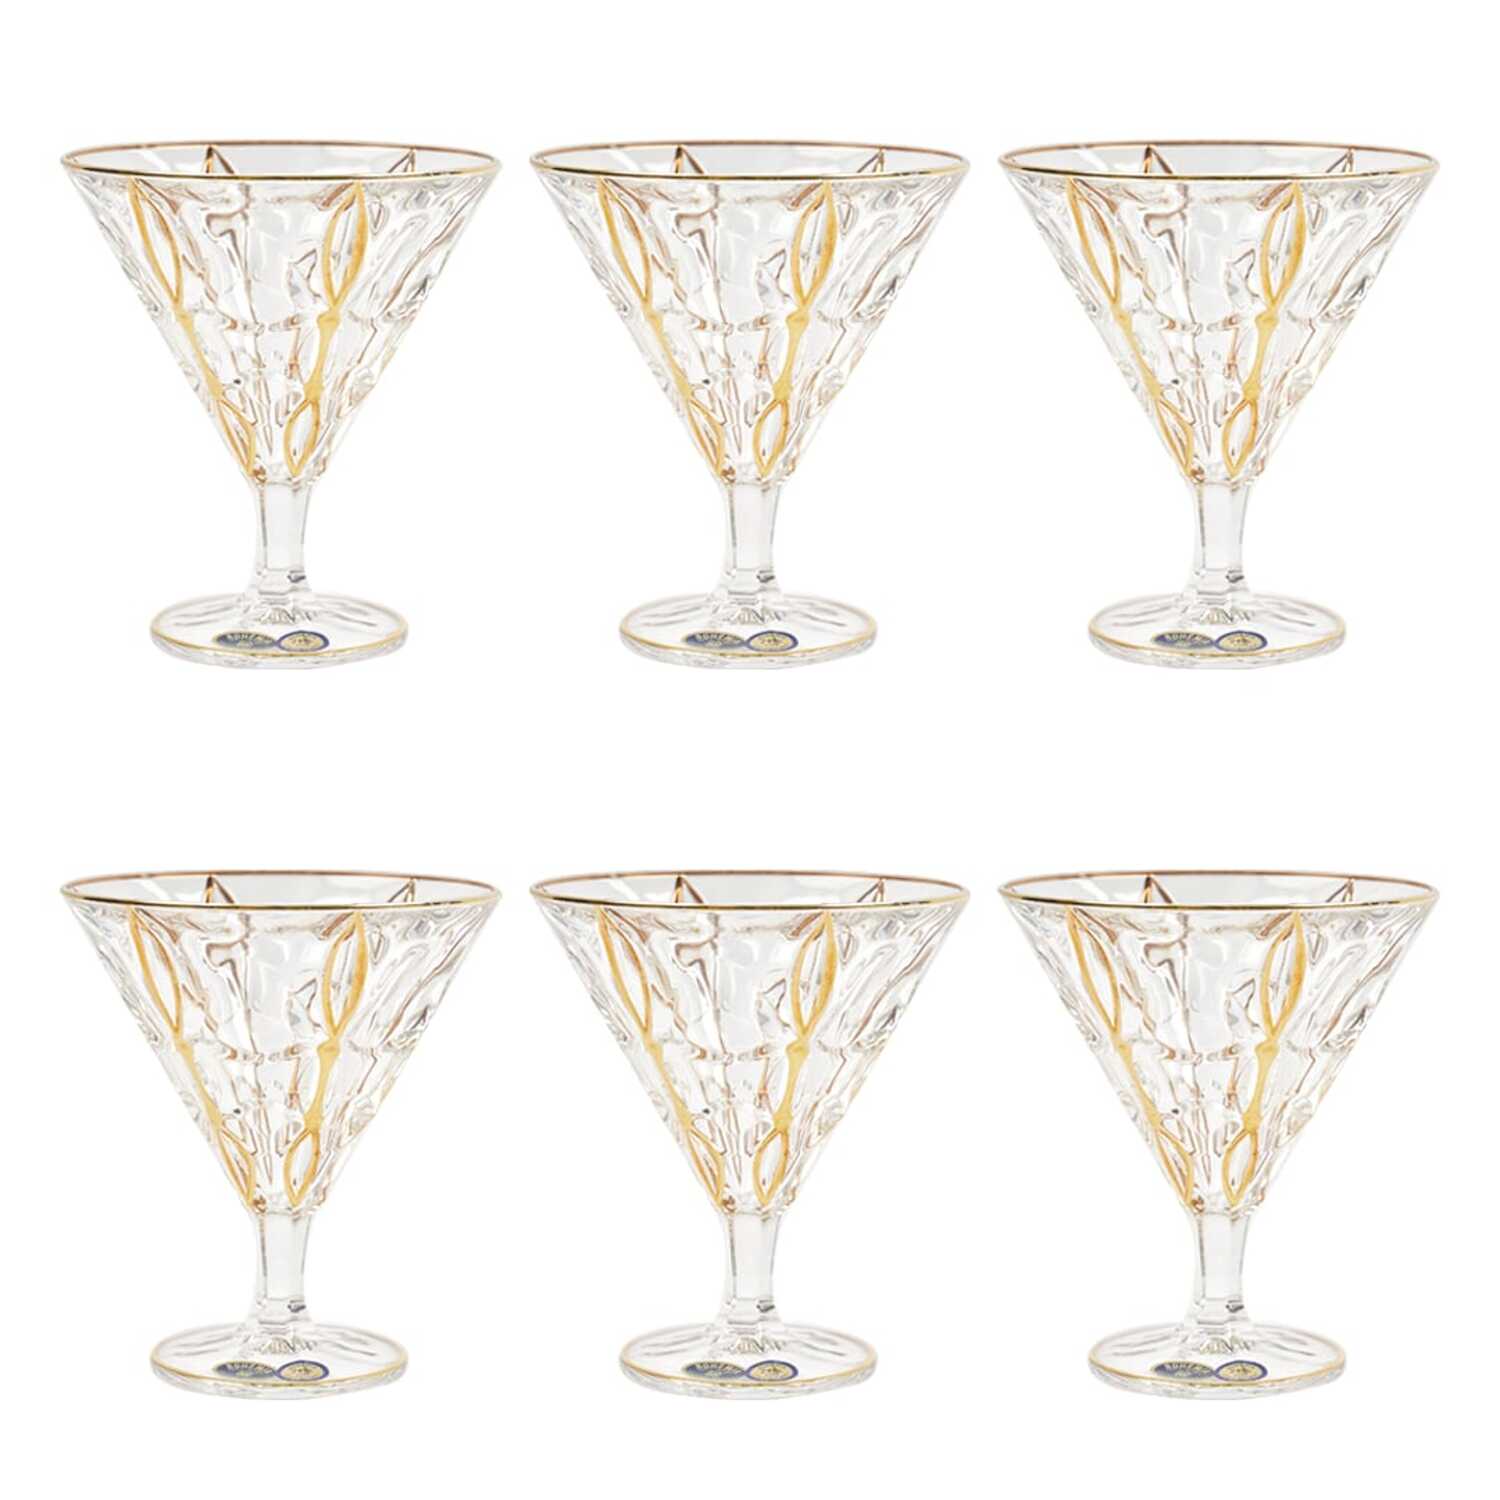 Bohemia Crystal Cocktail Set, 6 Pieces -Gold